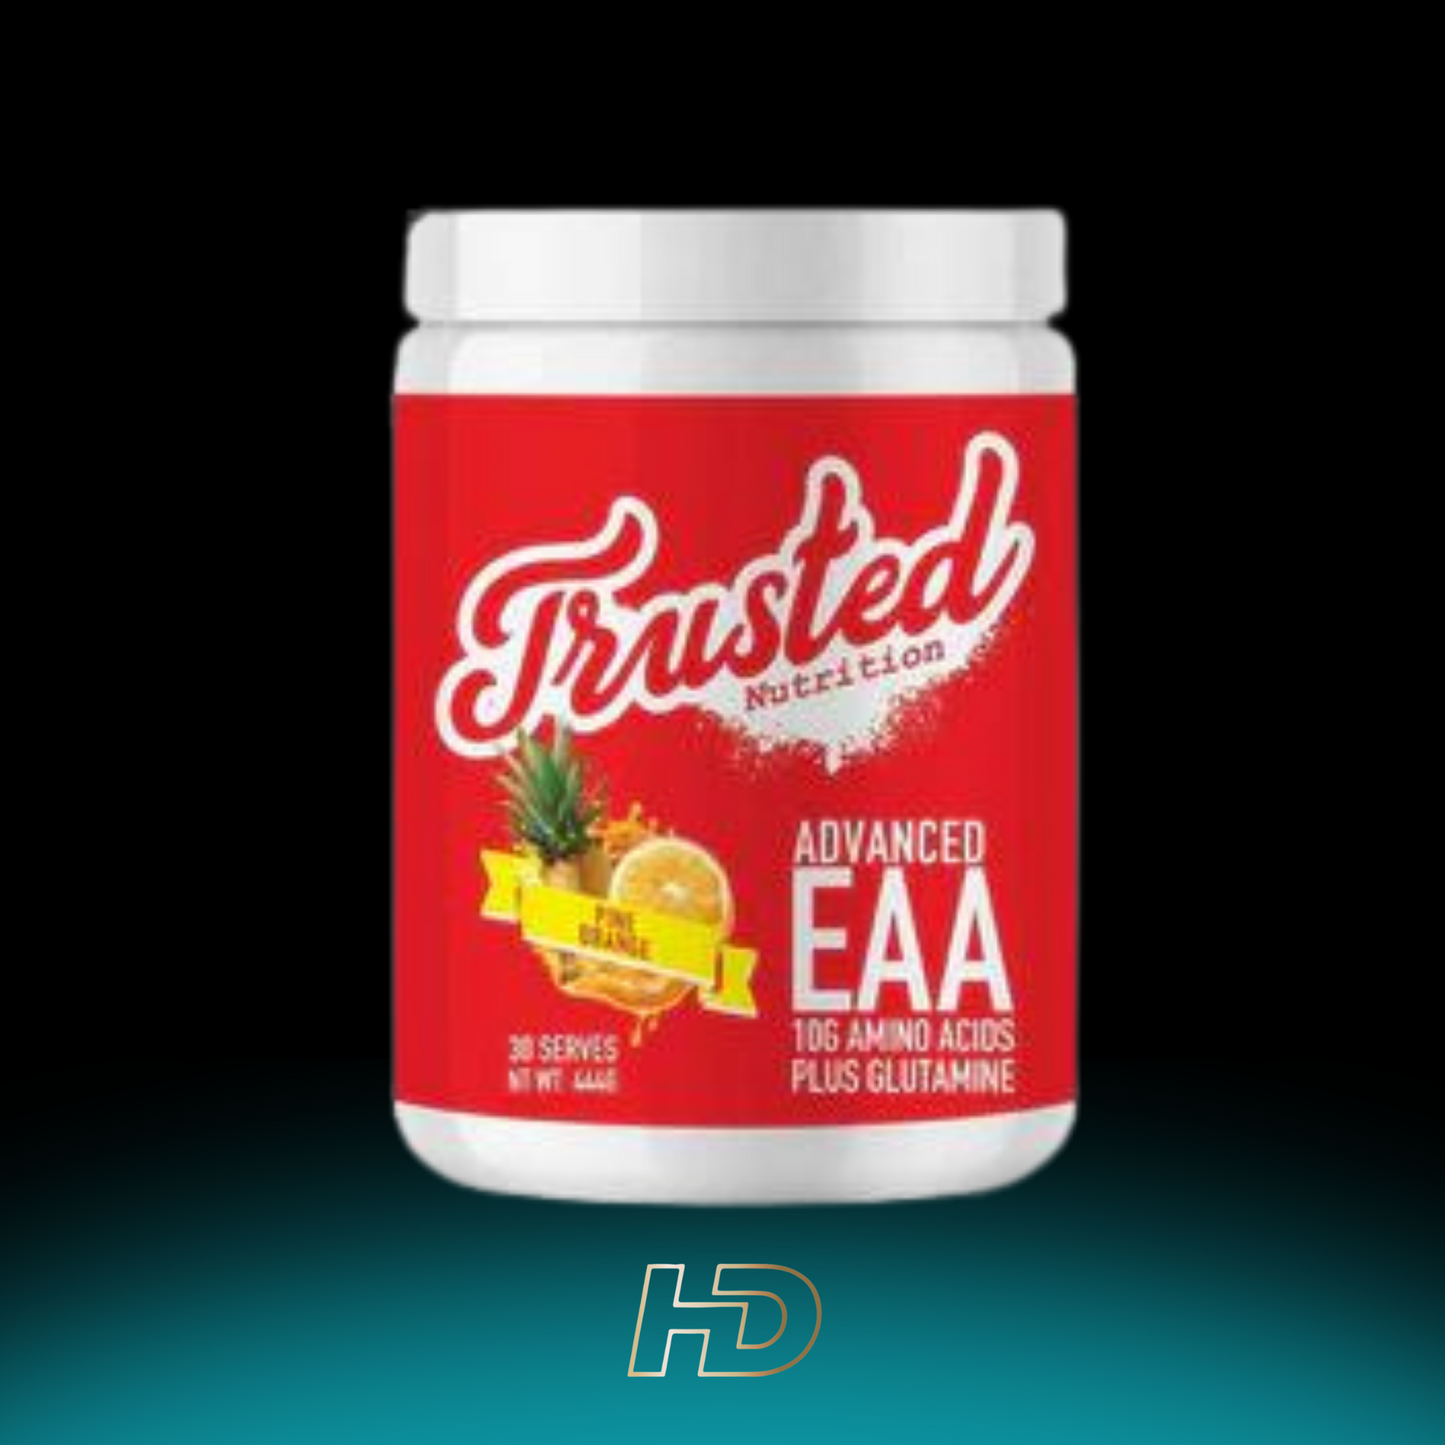 Trusted Nutrition | Advanced EAA - HD Supplements Australia